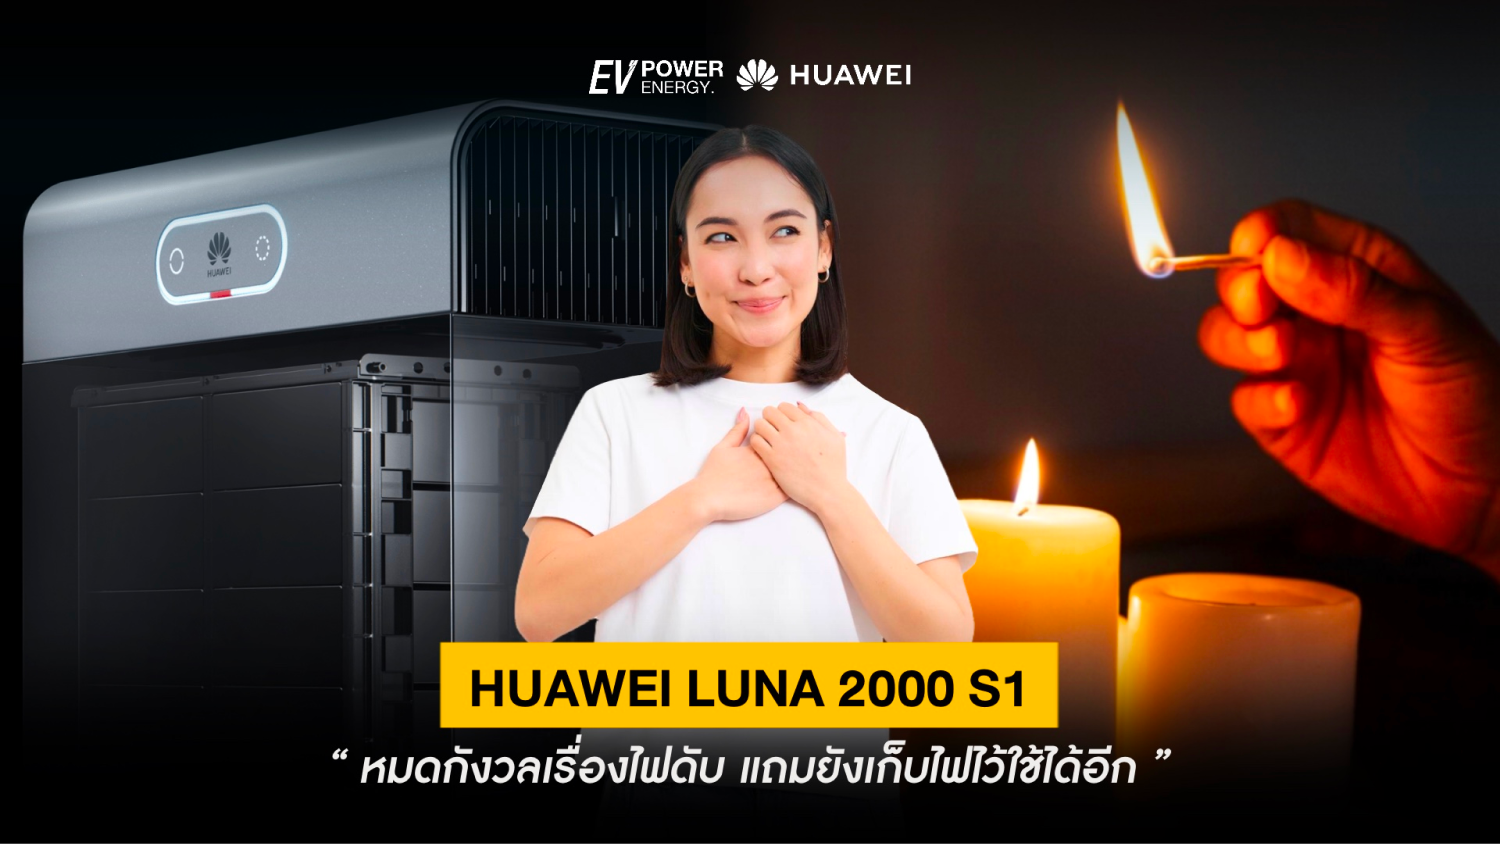 Huawei LUNA 2000 S1 หมดกังวลเรื่องไฟดับ แถมยังเก็บไฟไว้ใช้ได้อีก !